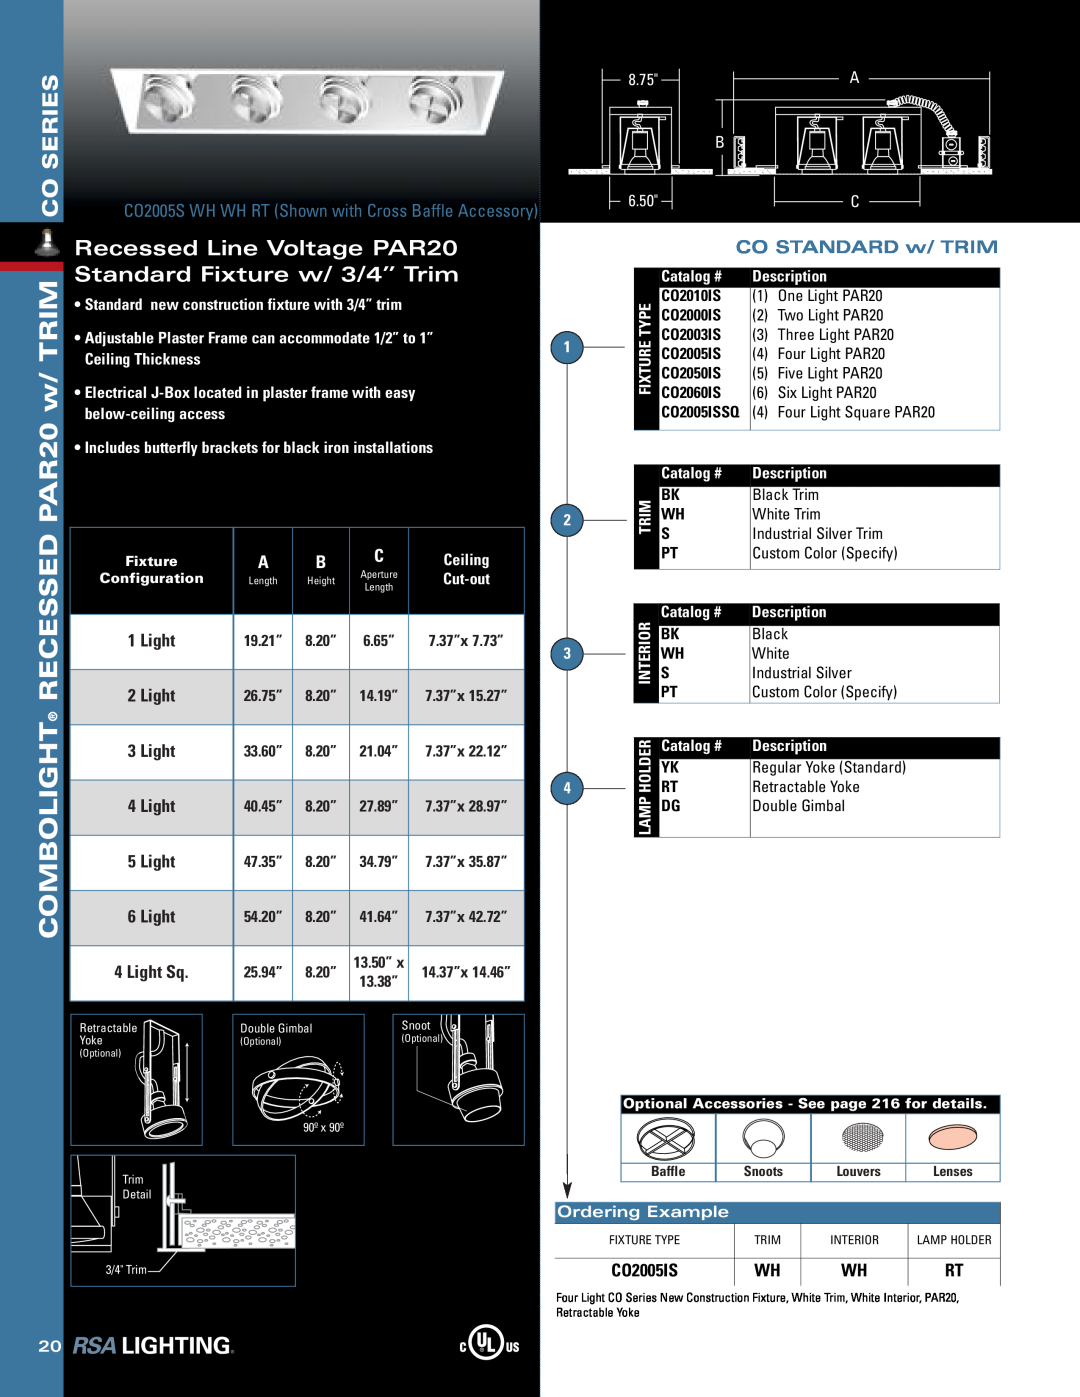 Cooper Lighting none manual Co Series, Recessed Line Voltage PAR20, Standard Fixture w/ 3/4” Trim, CO STANDARD w/ TRIM 